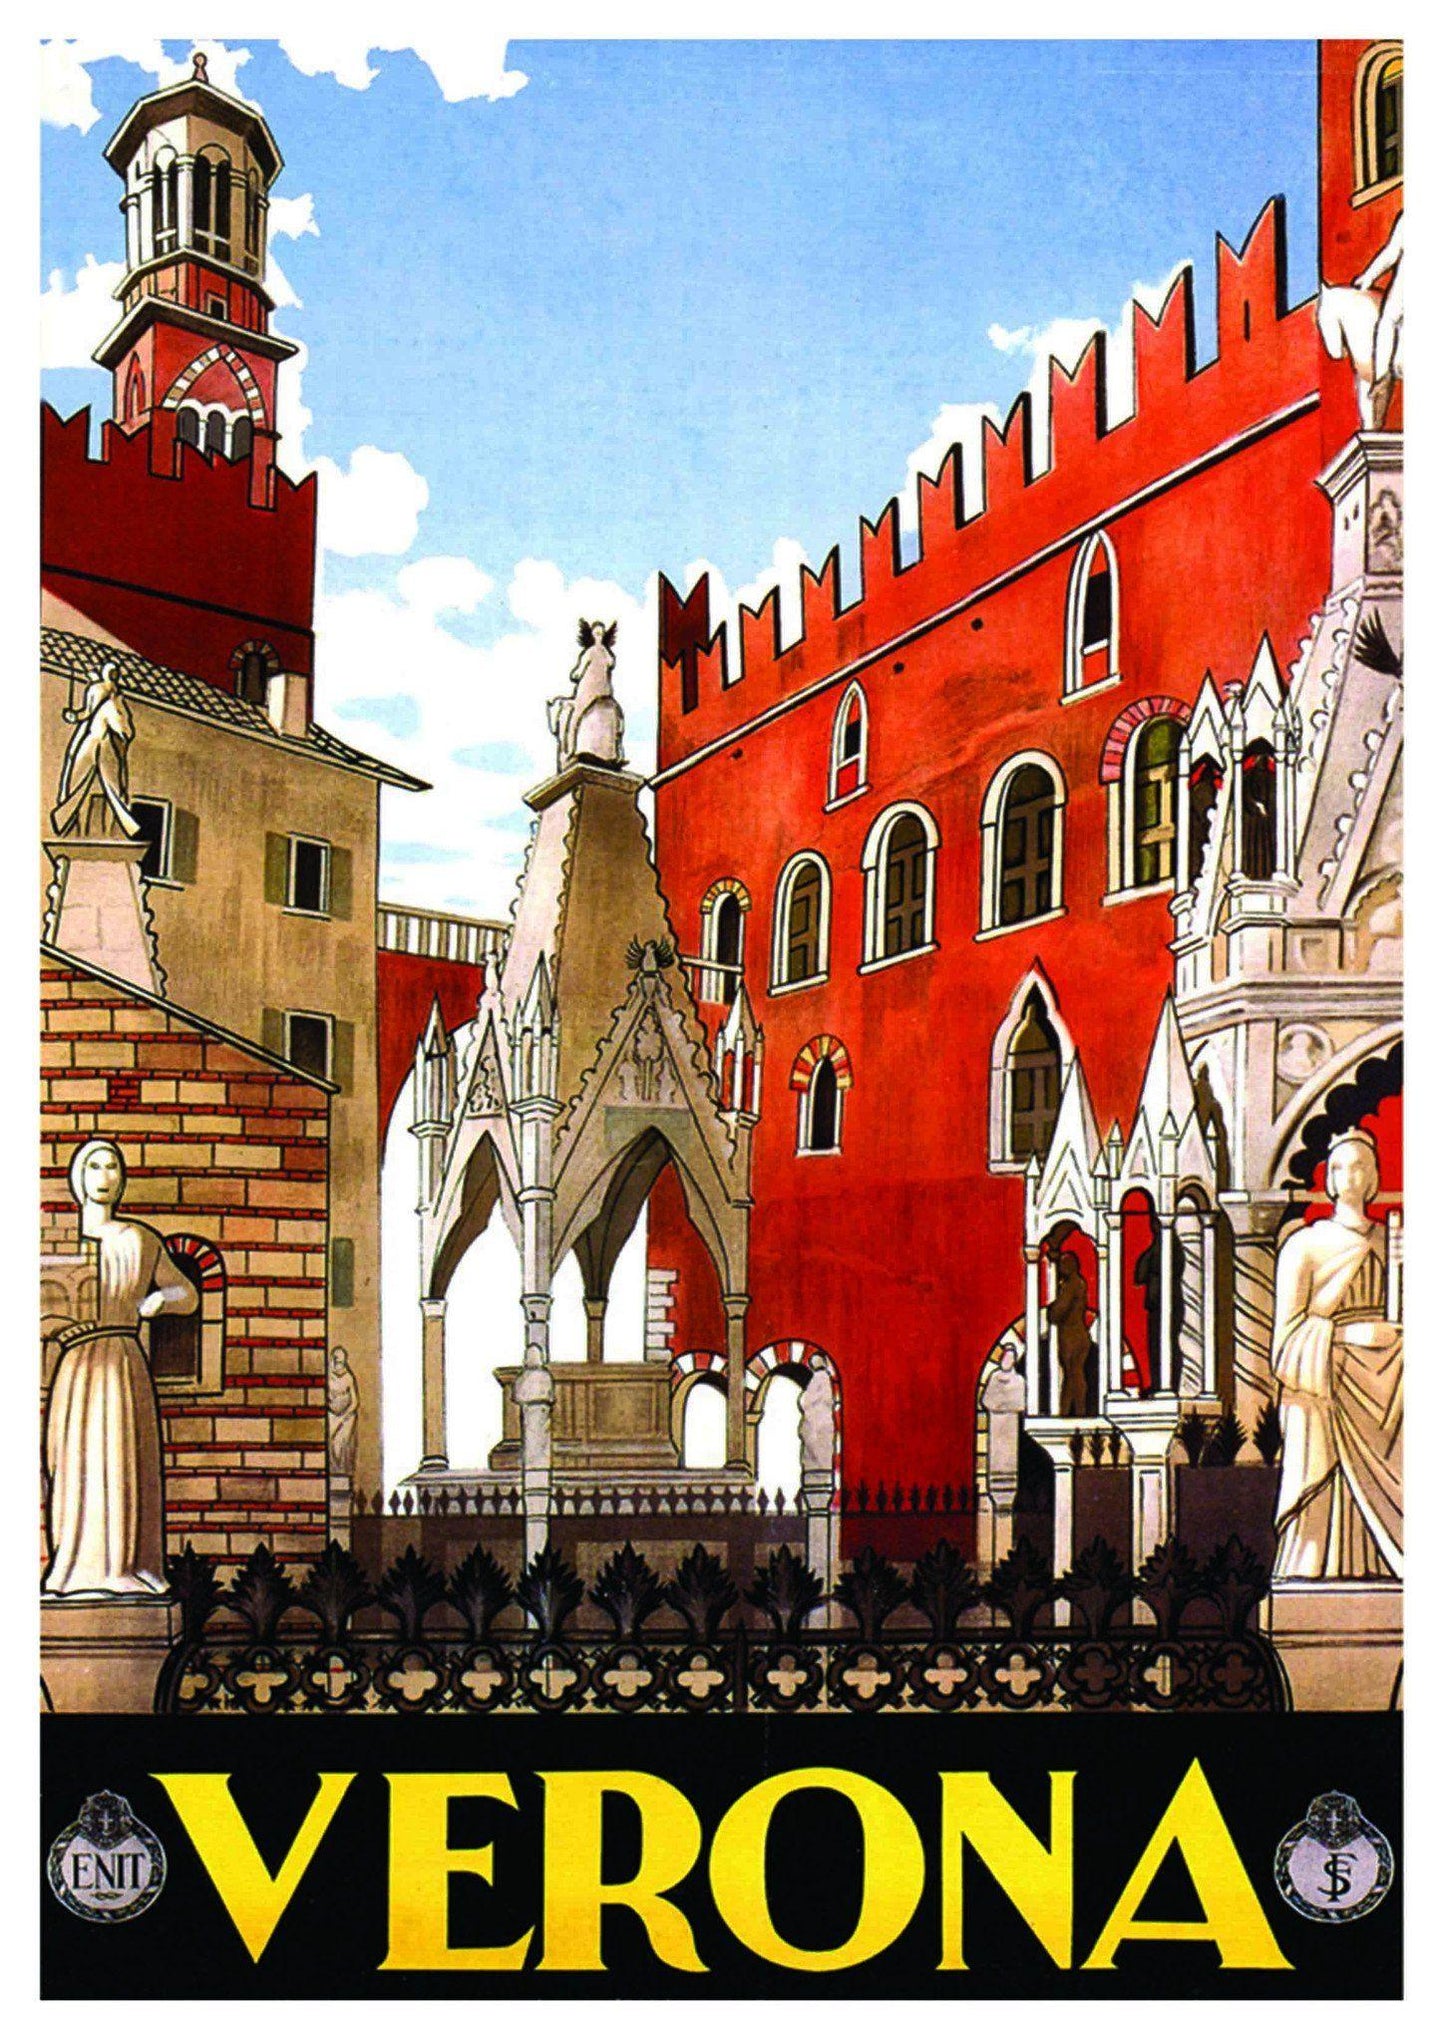 VERONA TRAVEL POSTER: Vintage Italian City Print - Pimlico Prints